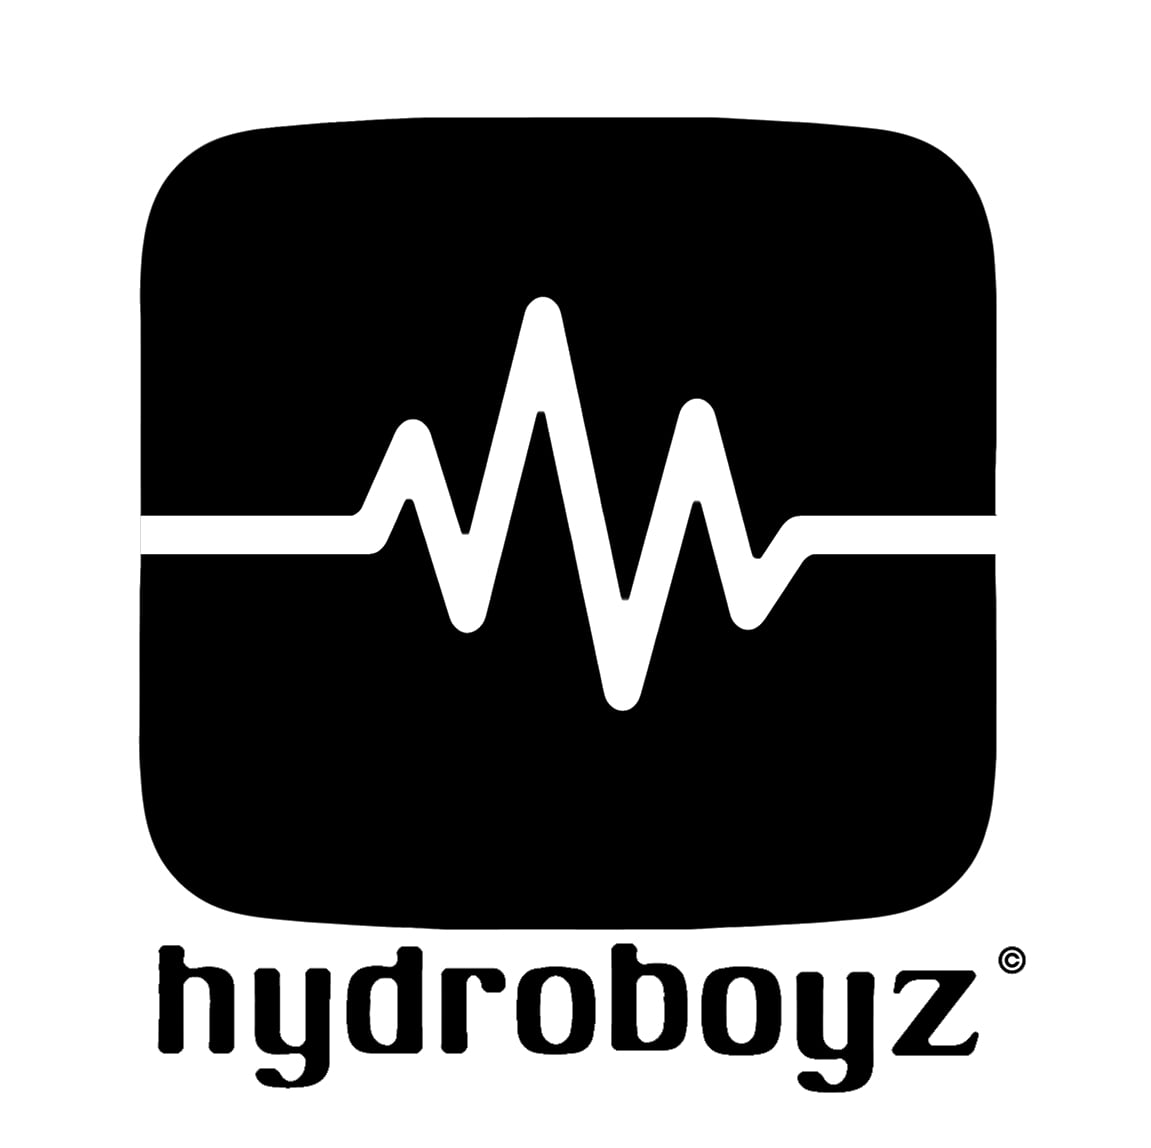 hydro-update-youtube